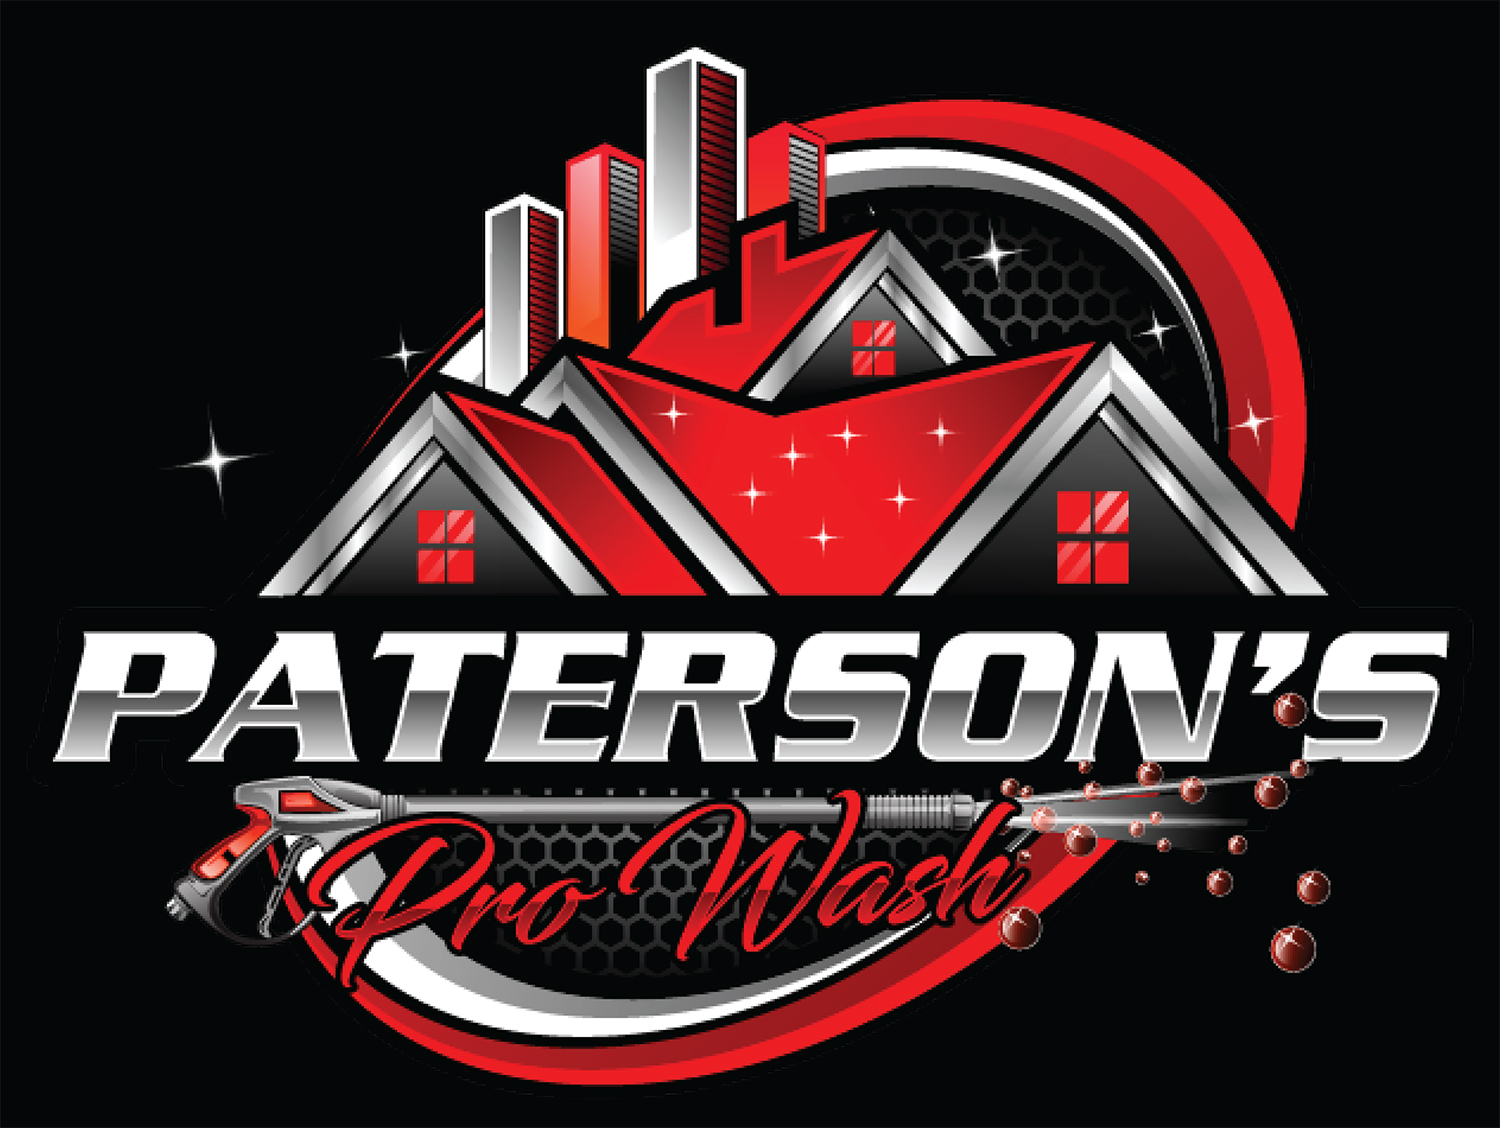 Patersons Pro Wash